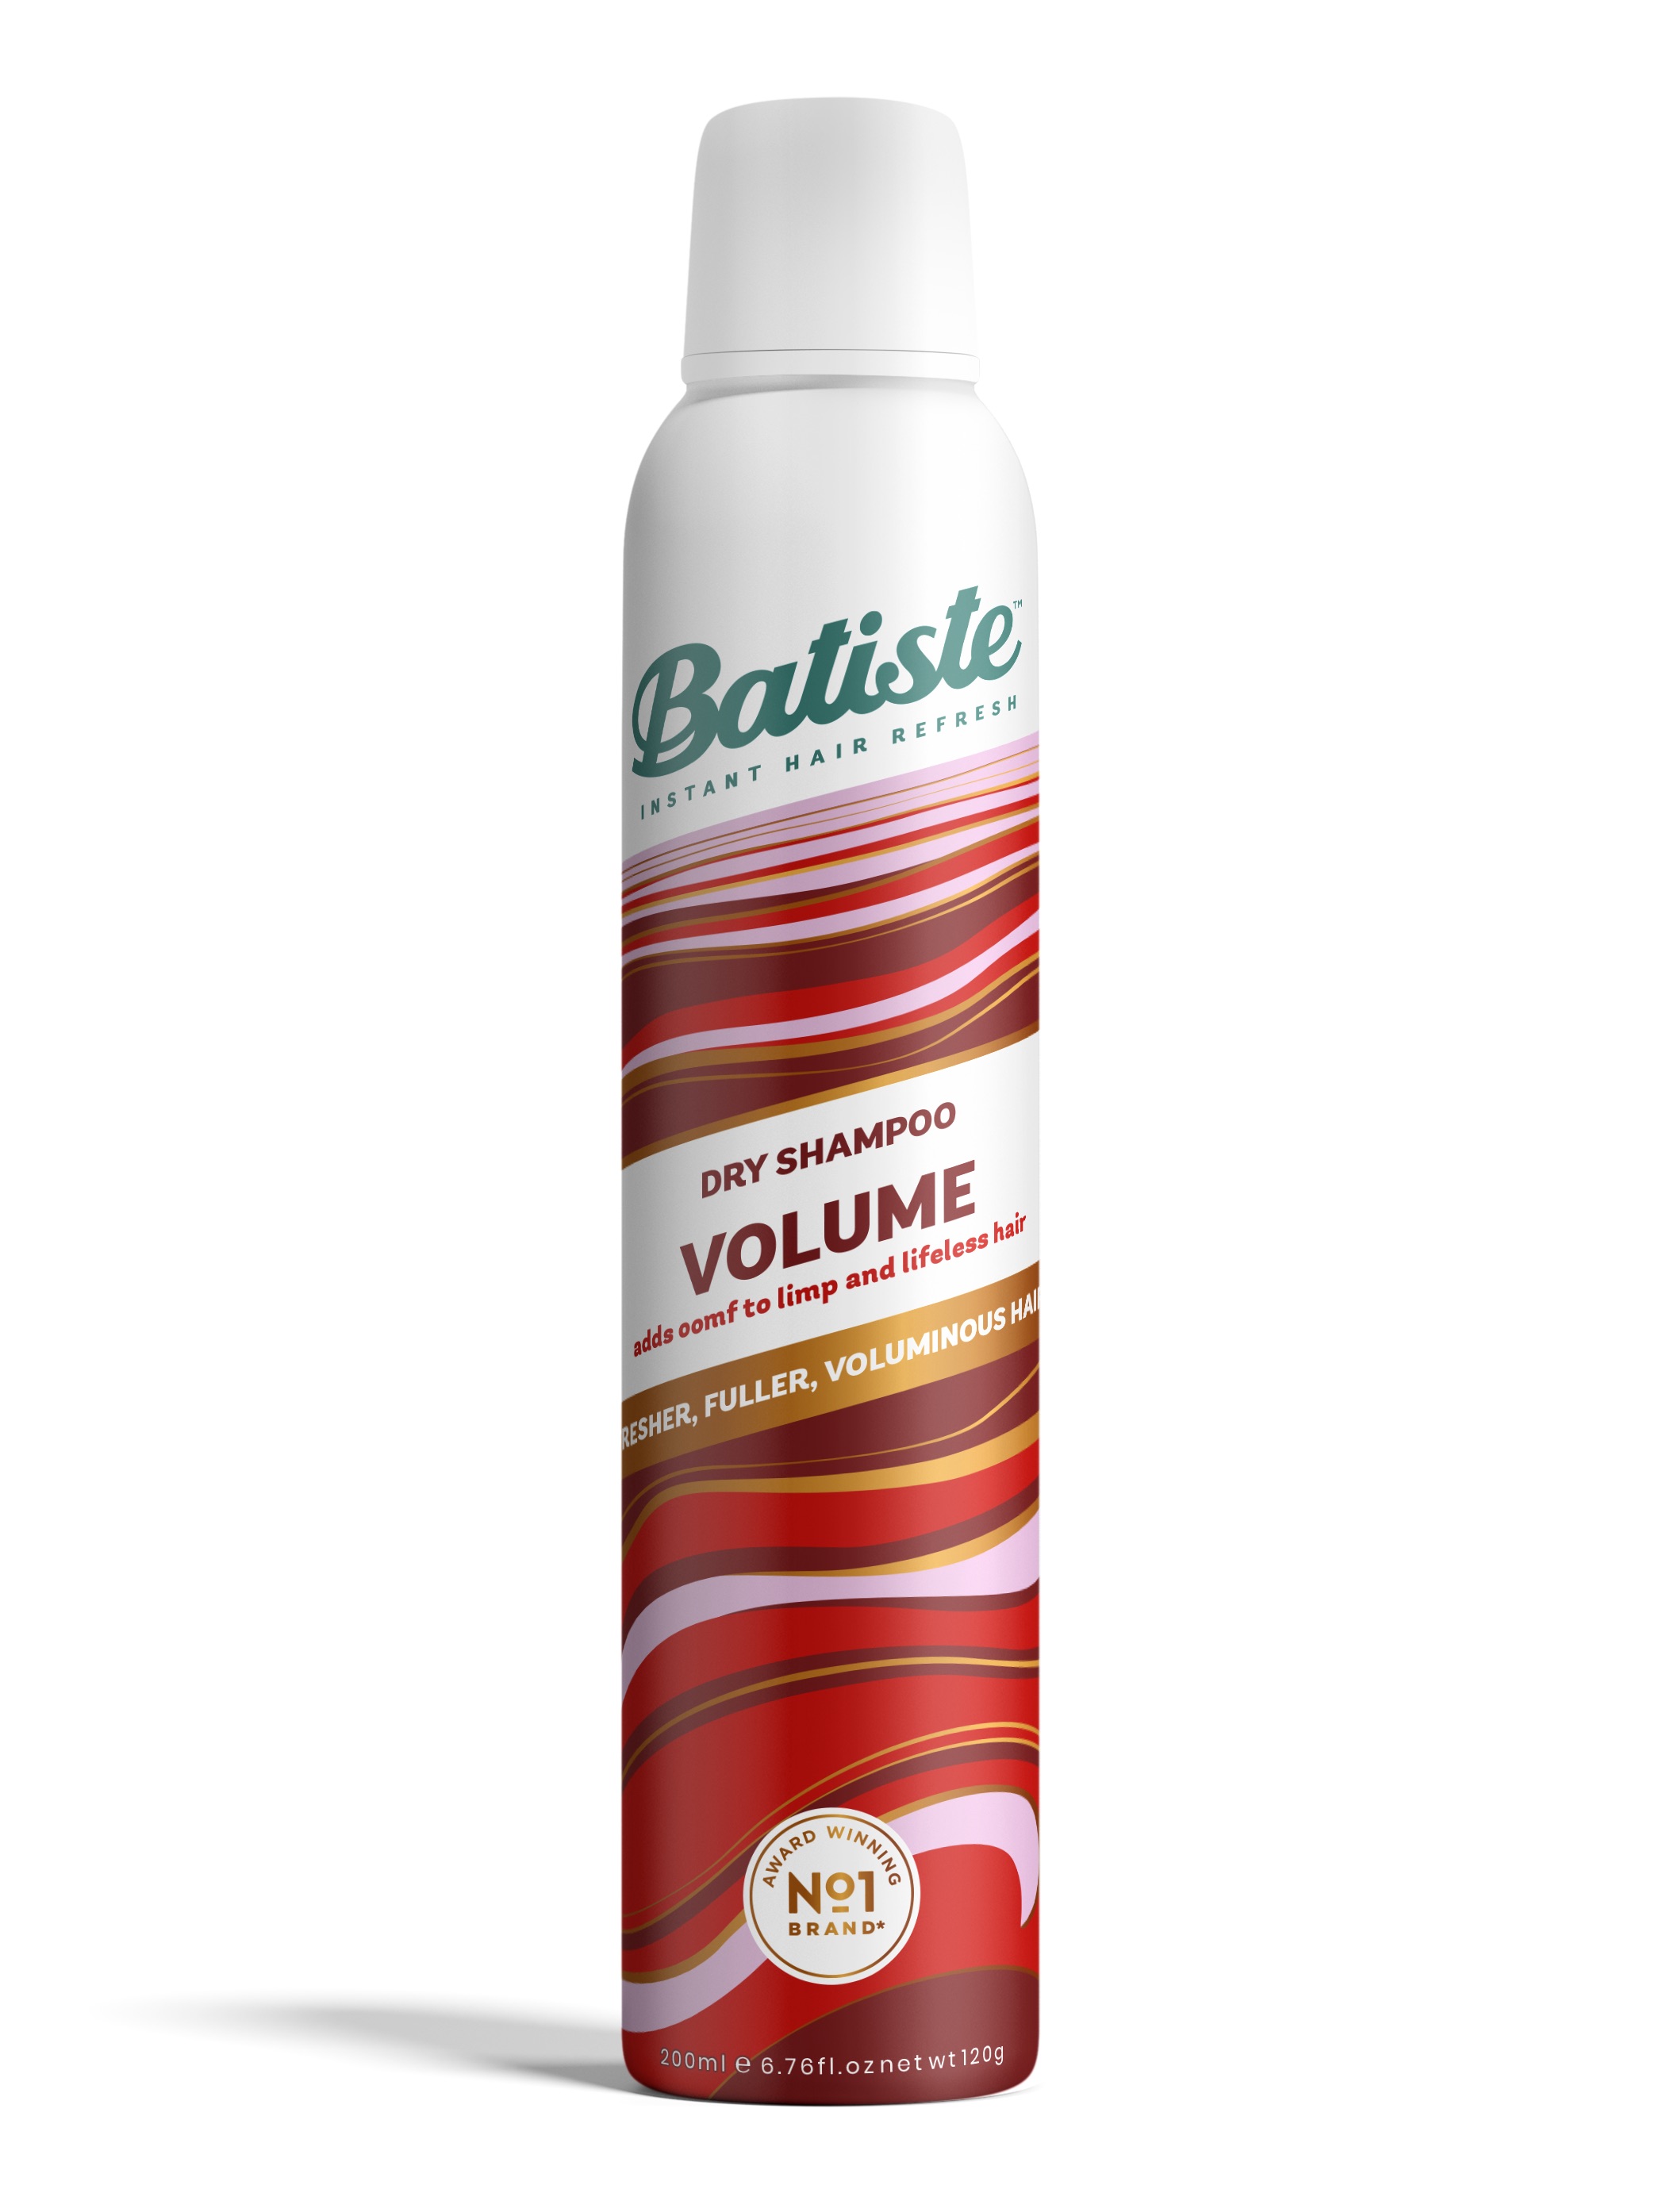 Сухой шампунь volume. Сухой шампунь Батист для объема. Шампунь Батист Heavenly Volume. Batiste Dry Shampoo Heavenly Volume. Batiste Dry Shampoo Volume XXL.